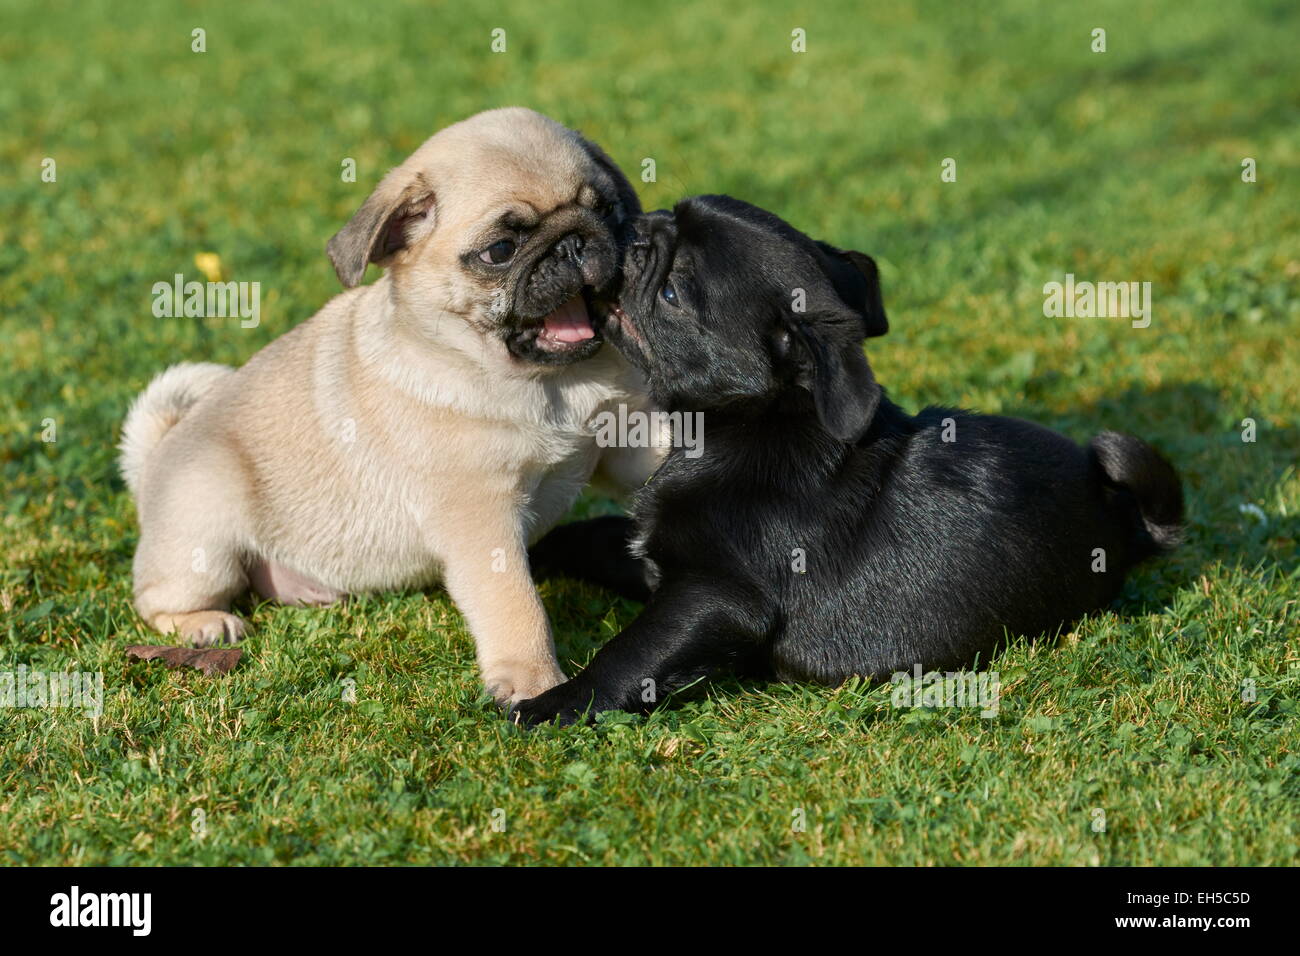 pug puppies playing